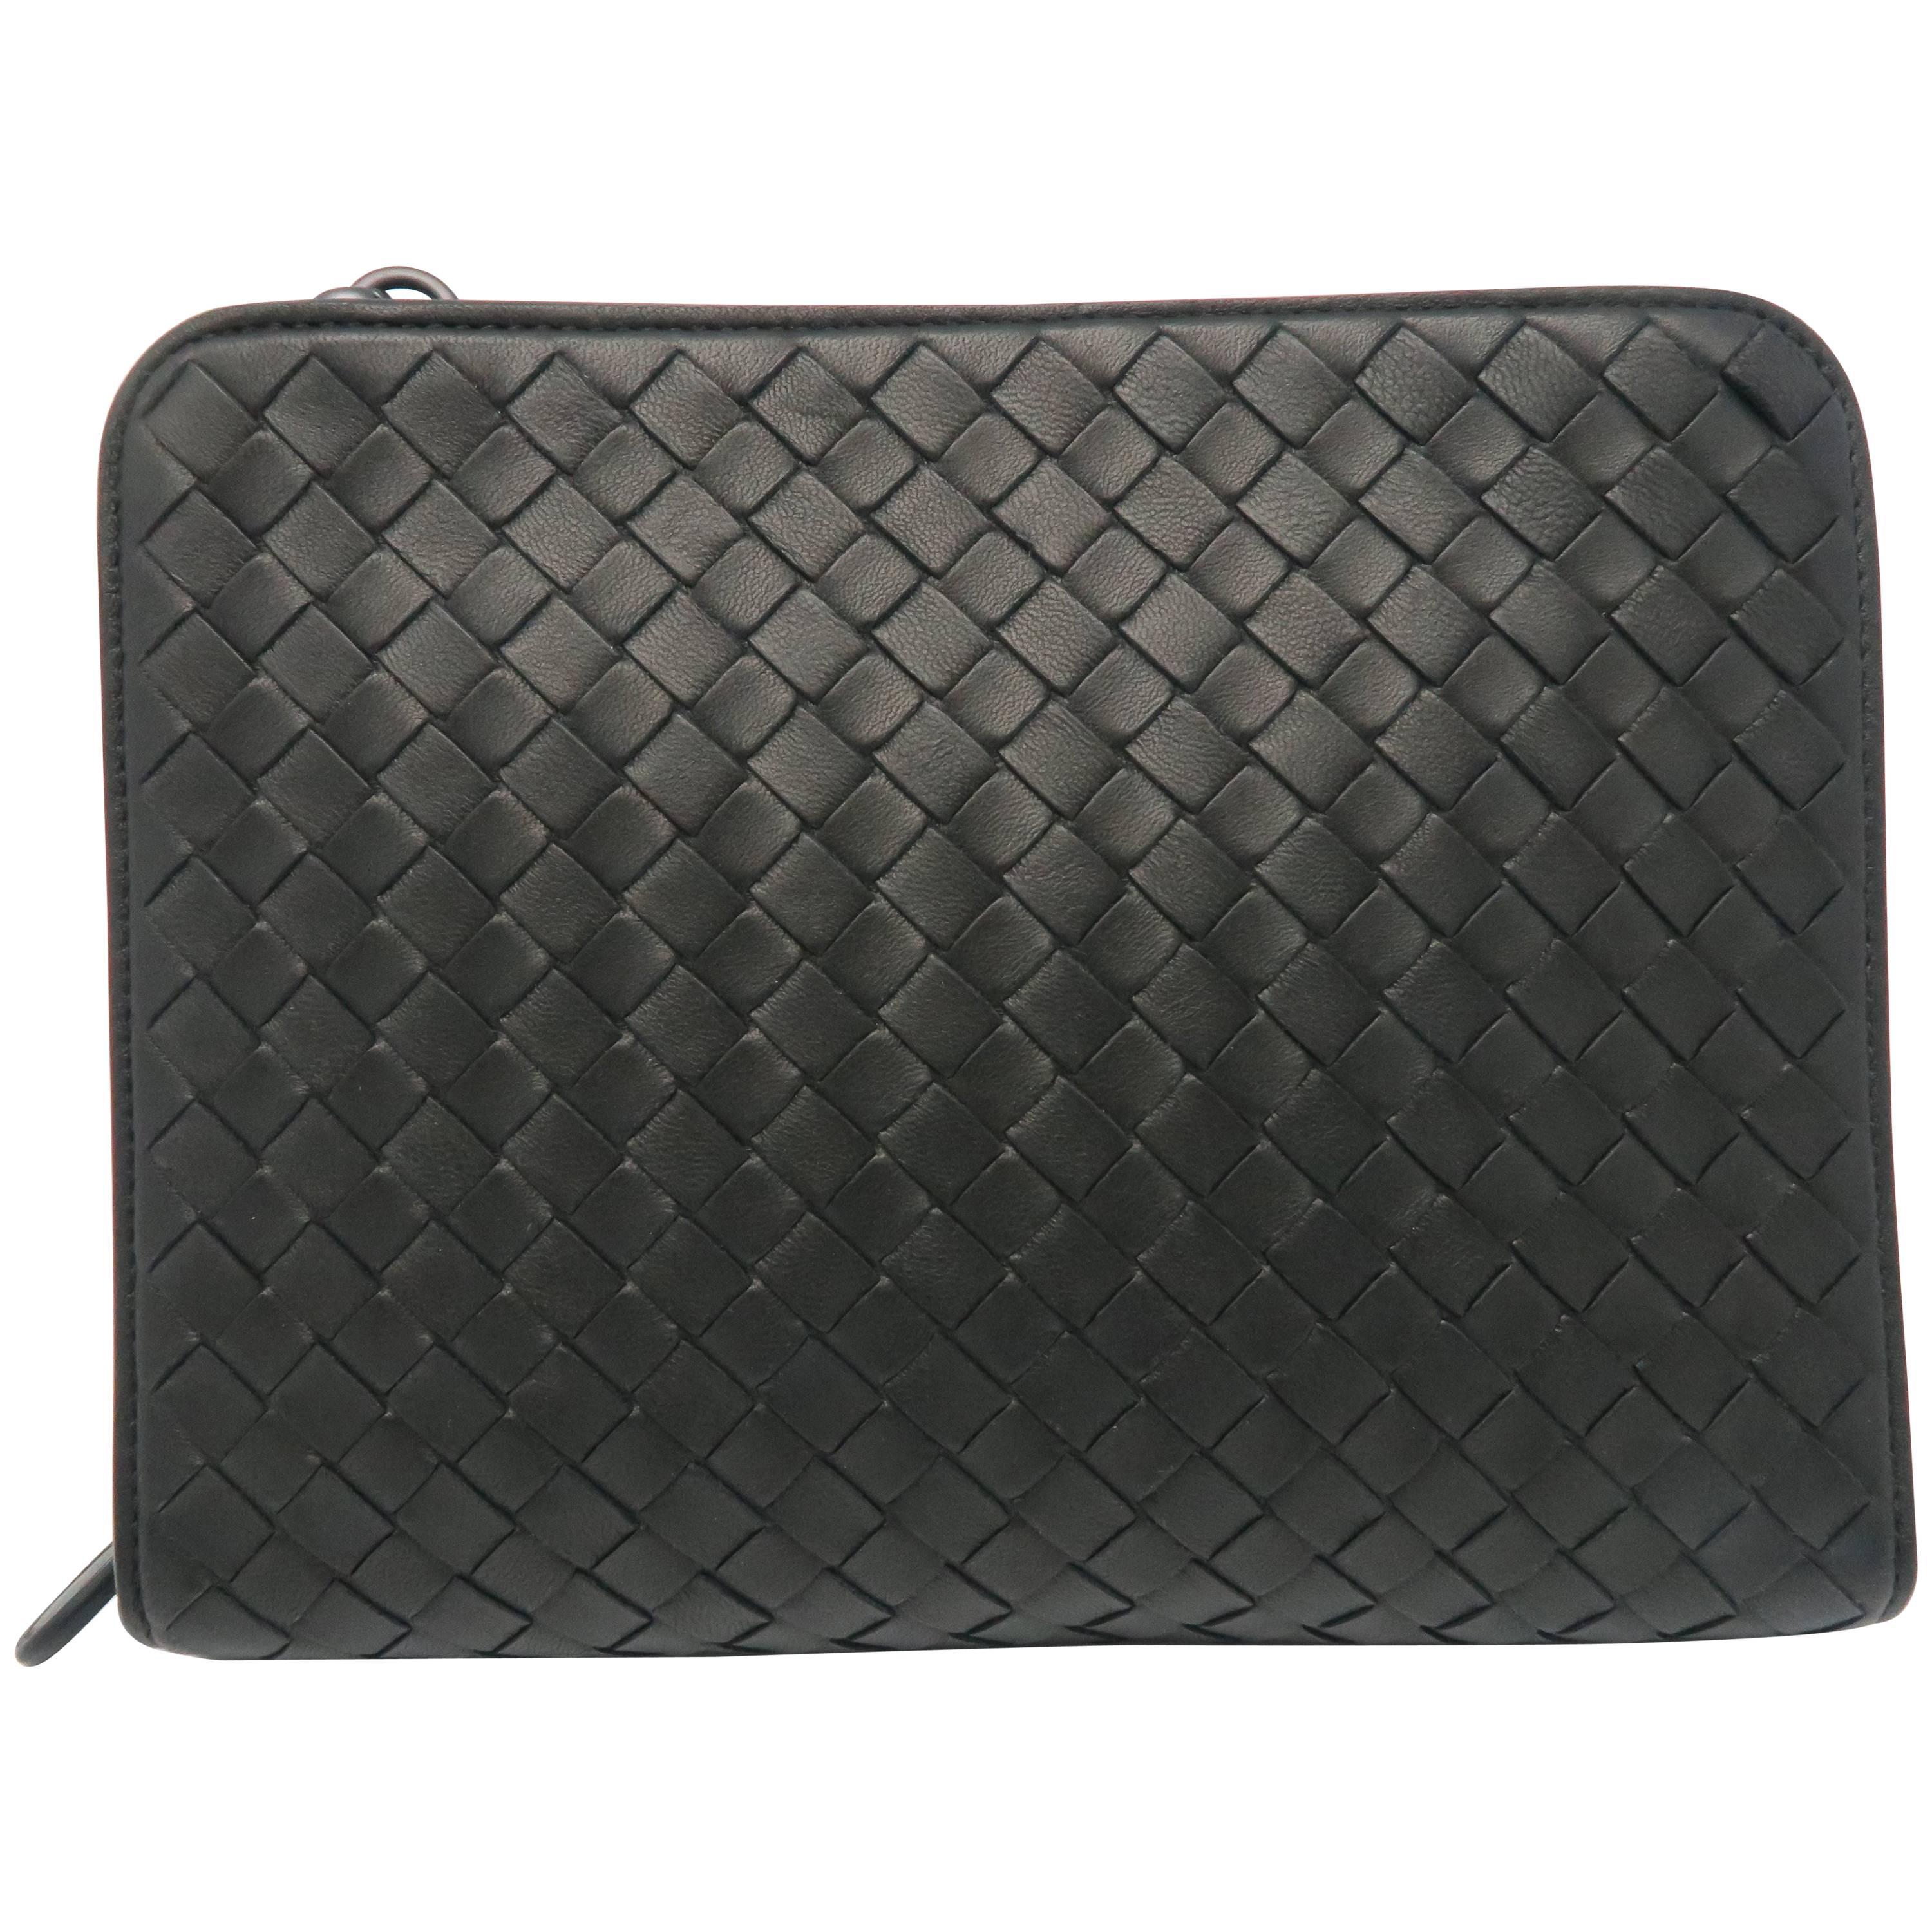 Chanel Black Intrecciato Leather Chain Shoulder Bag For Sale